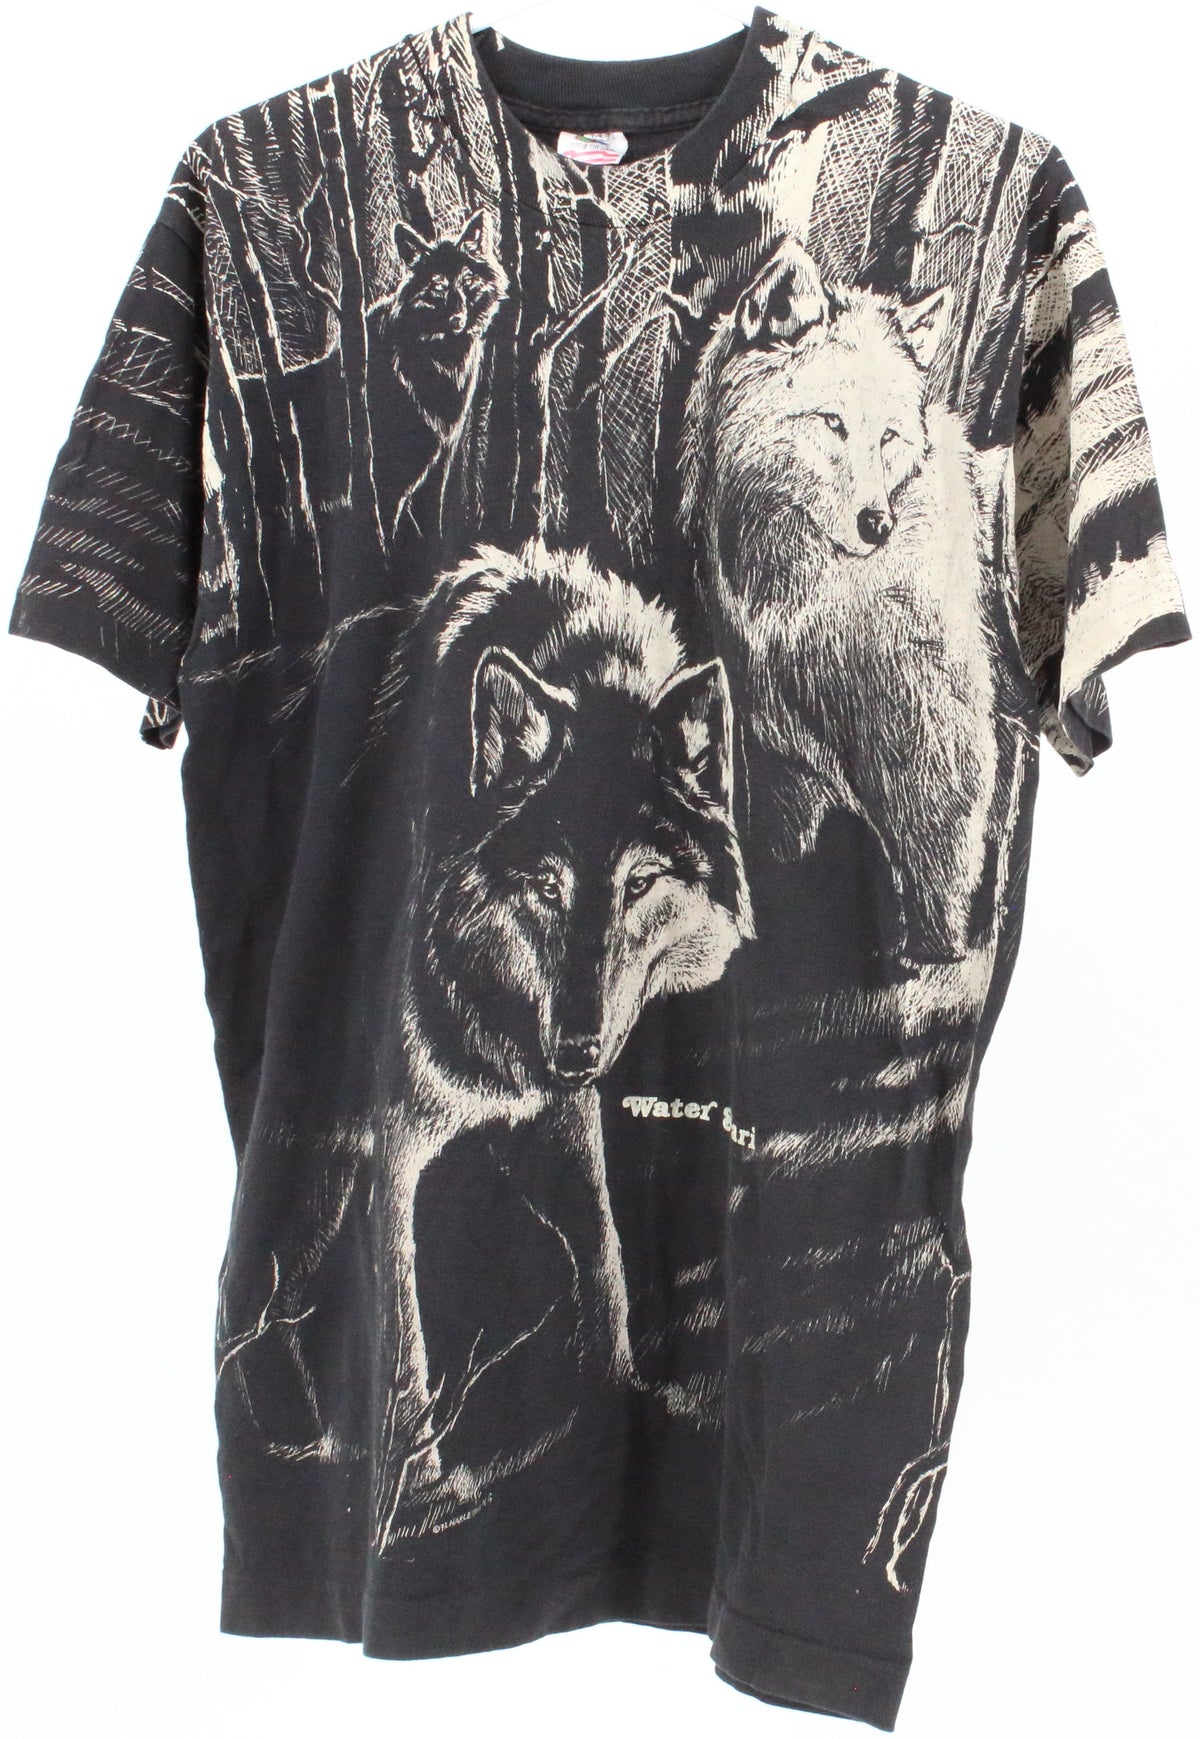 Fruit Of The Loom Water Safari Black and Beige Print T-Shirt